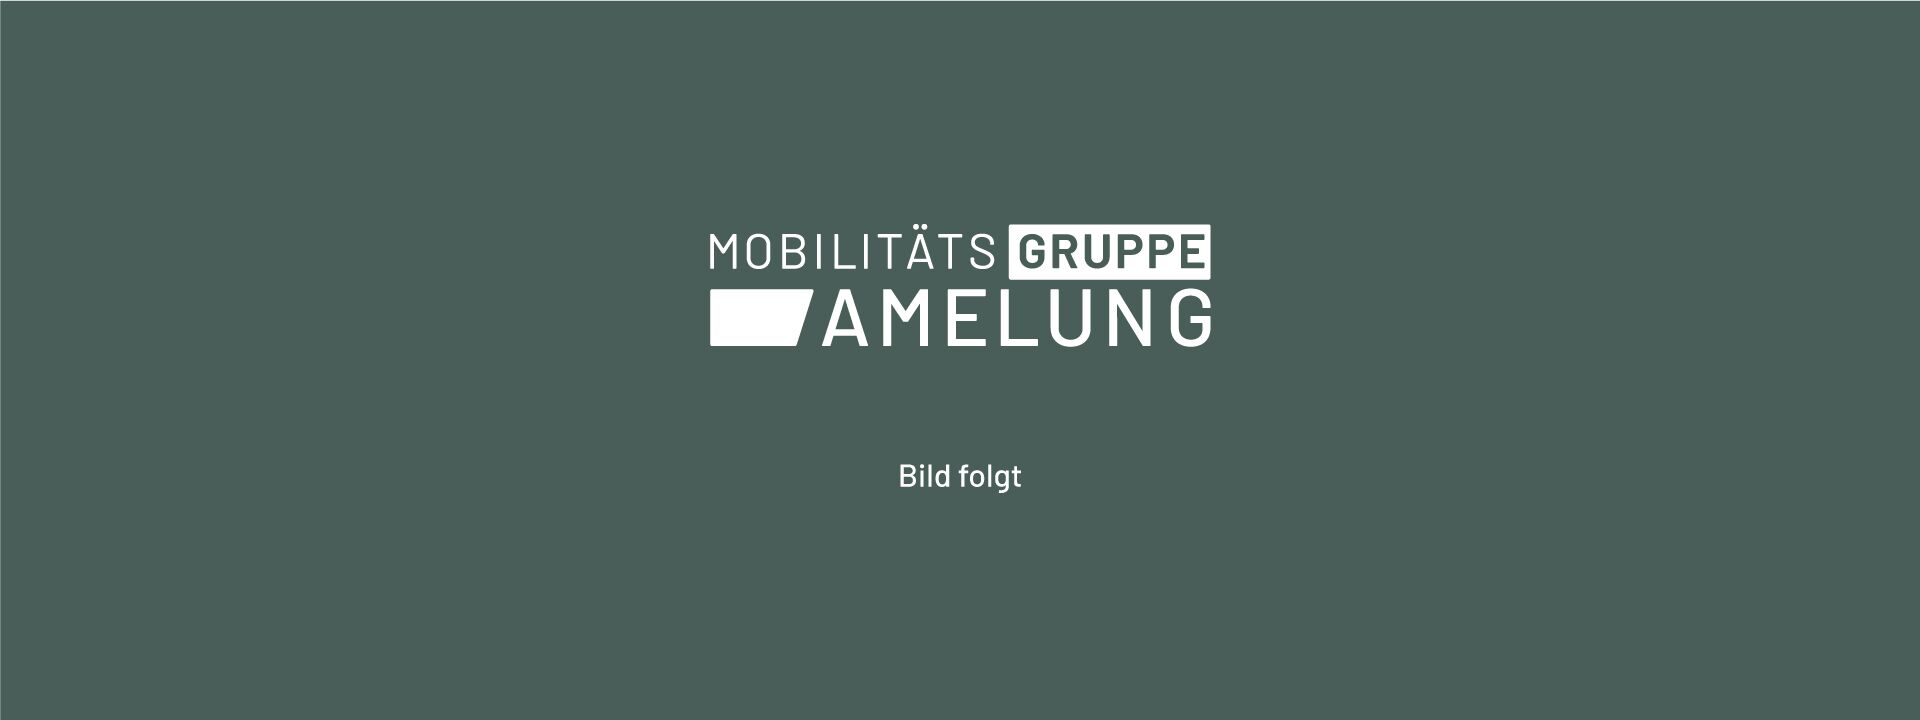 Land Rover Engelskirchen ANDAMO Holding GmbH & Co. KG